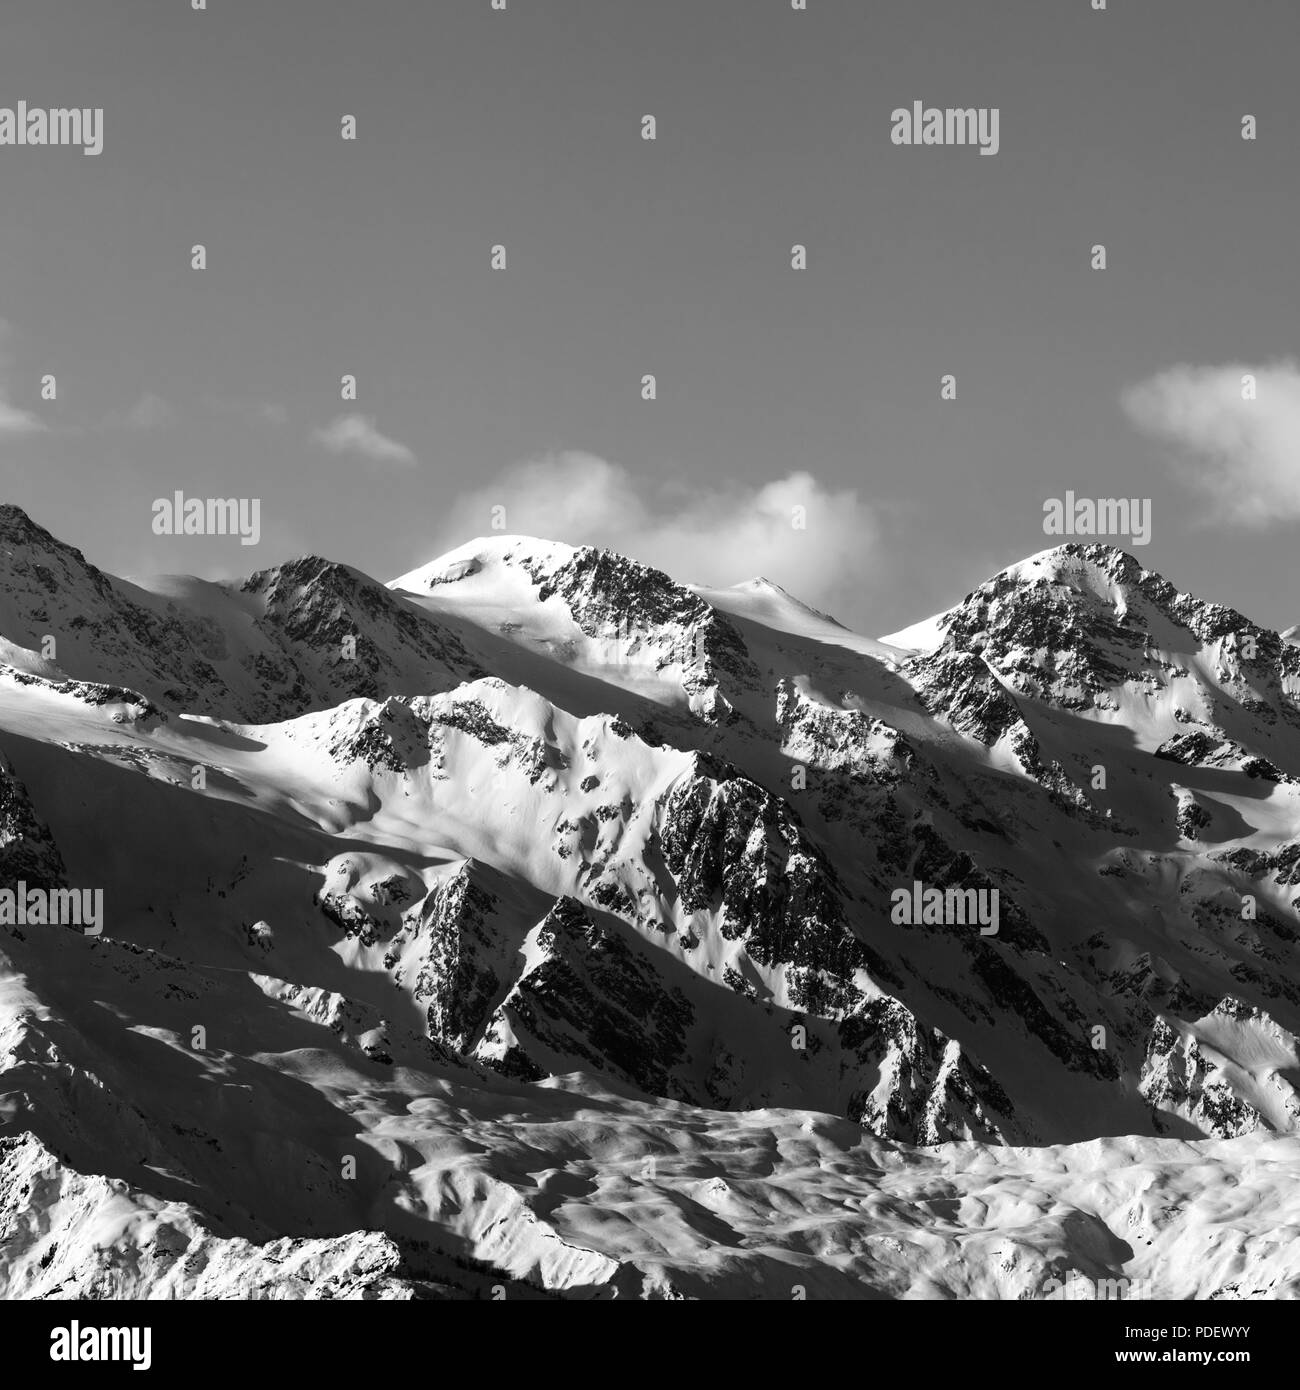 Black and white snowy winter mountains at sunny evening. Caucasus Mountains. Georgia, region Svaneti. Square image. Stock Photo